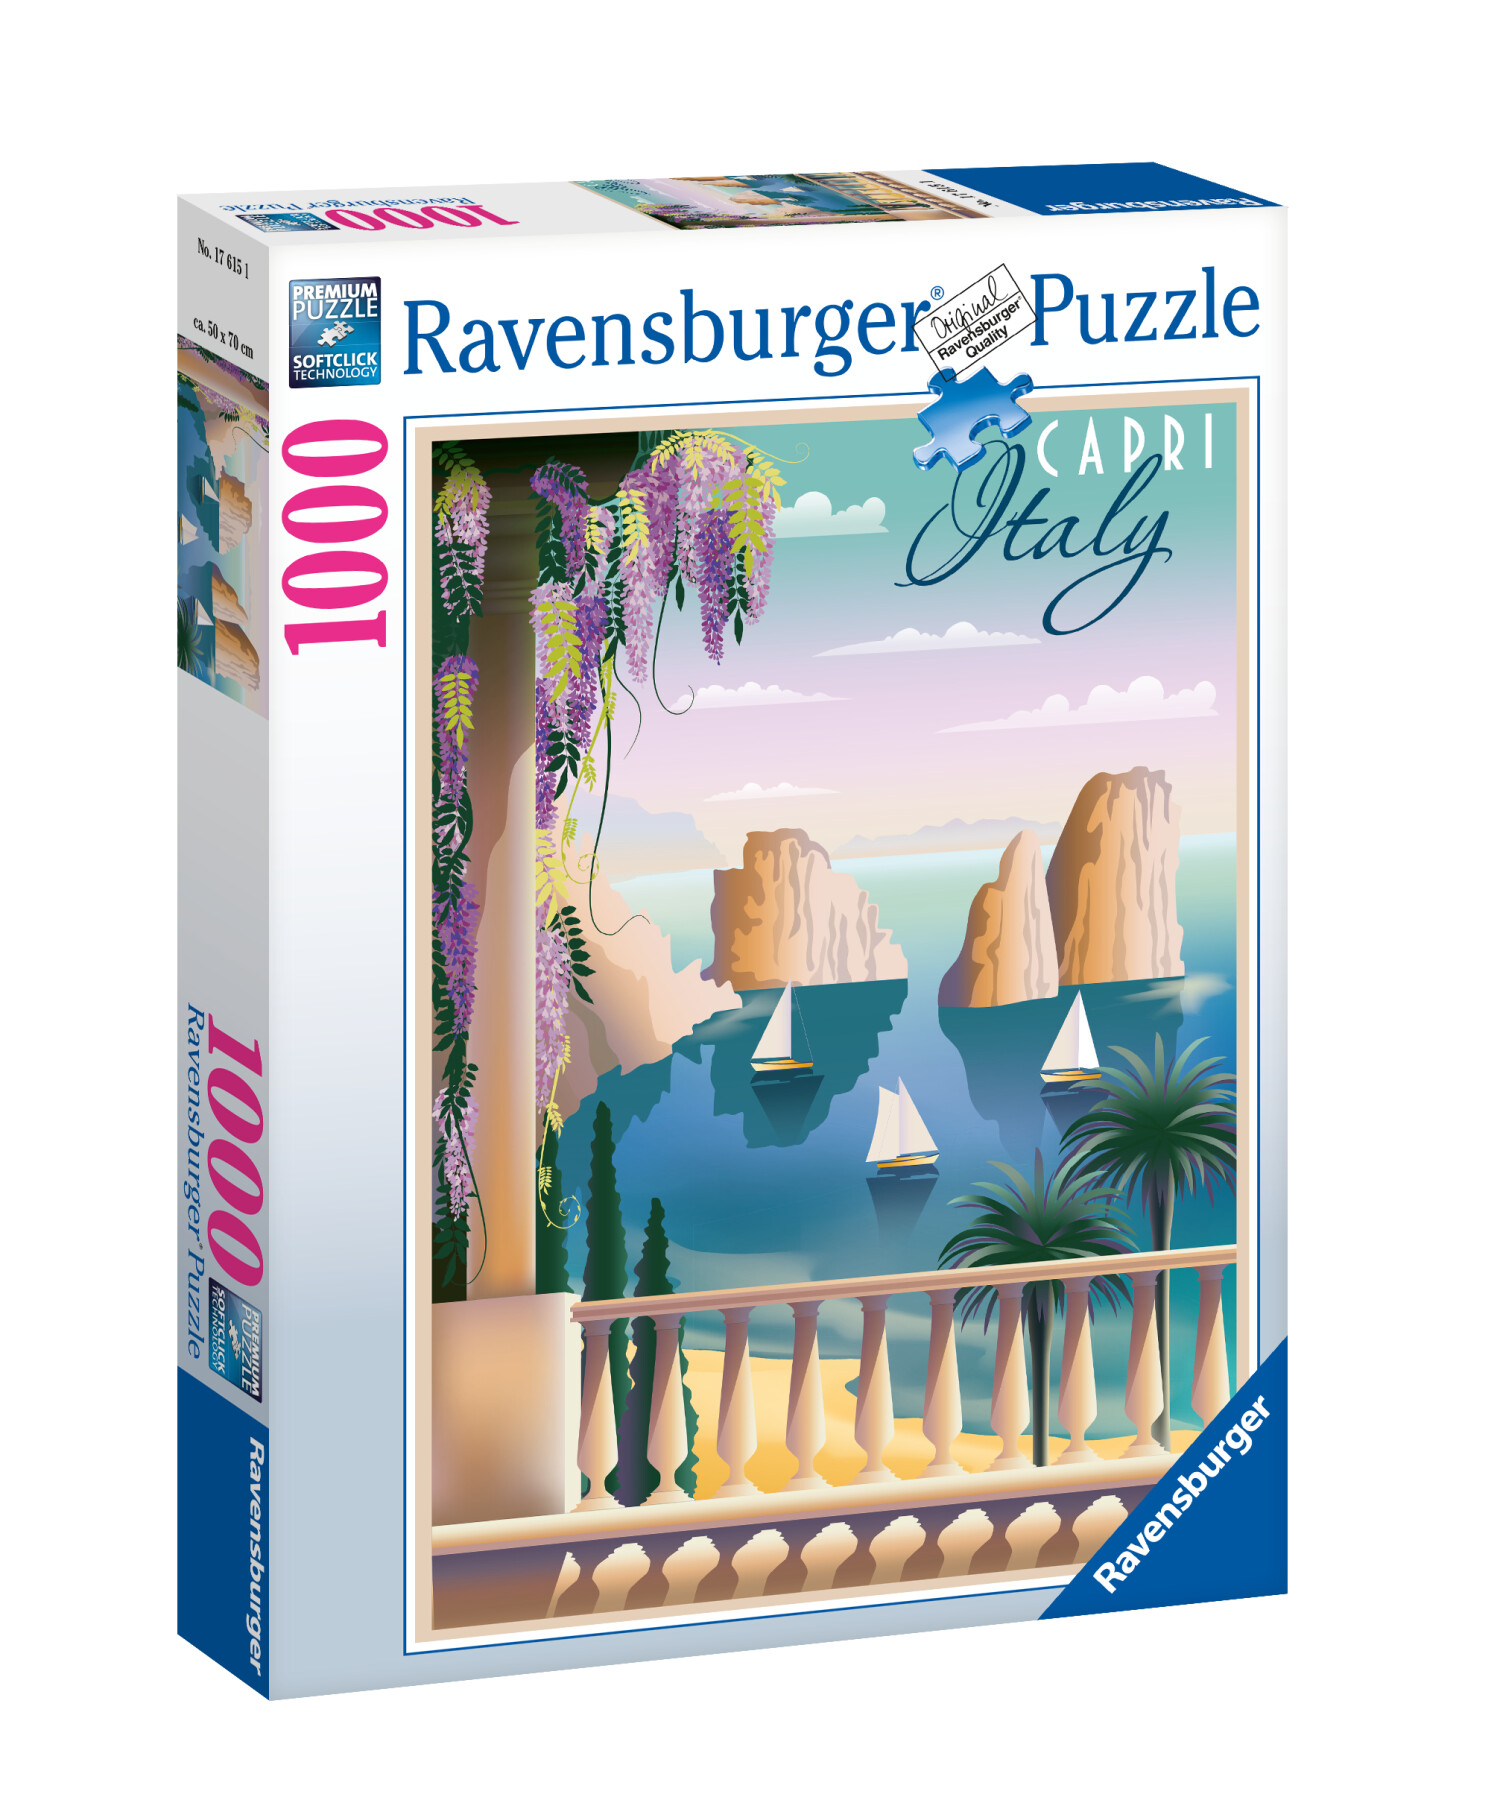 Ravensburger - puzzle cartolina da capri, italia, 1000 pezzi, puzzle adulti - RAVENSBURGER